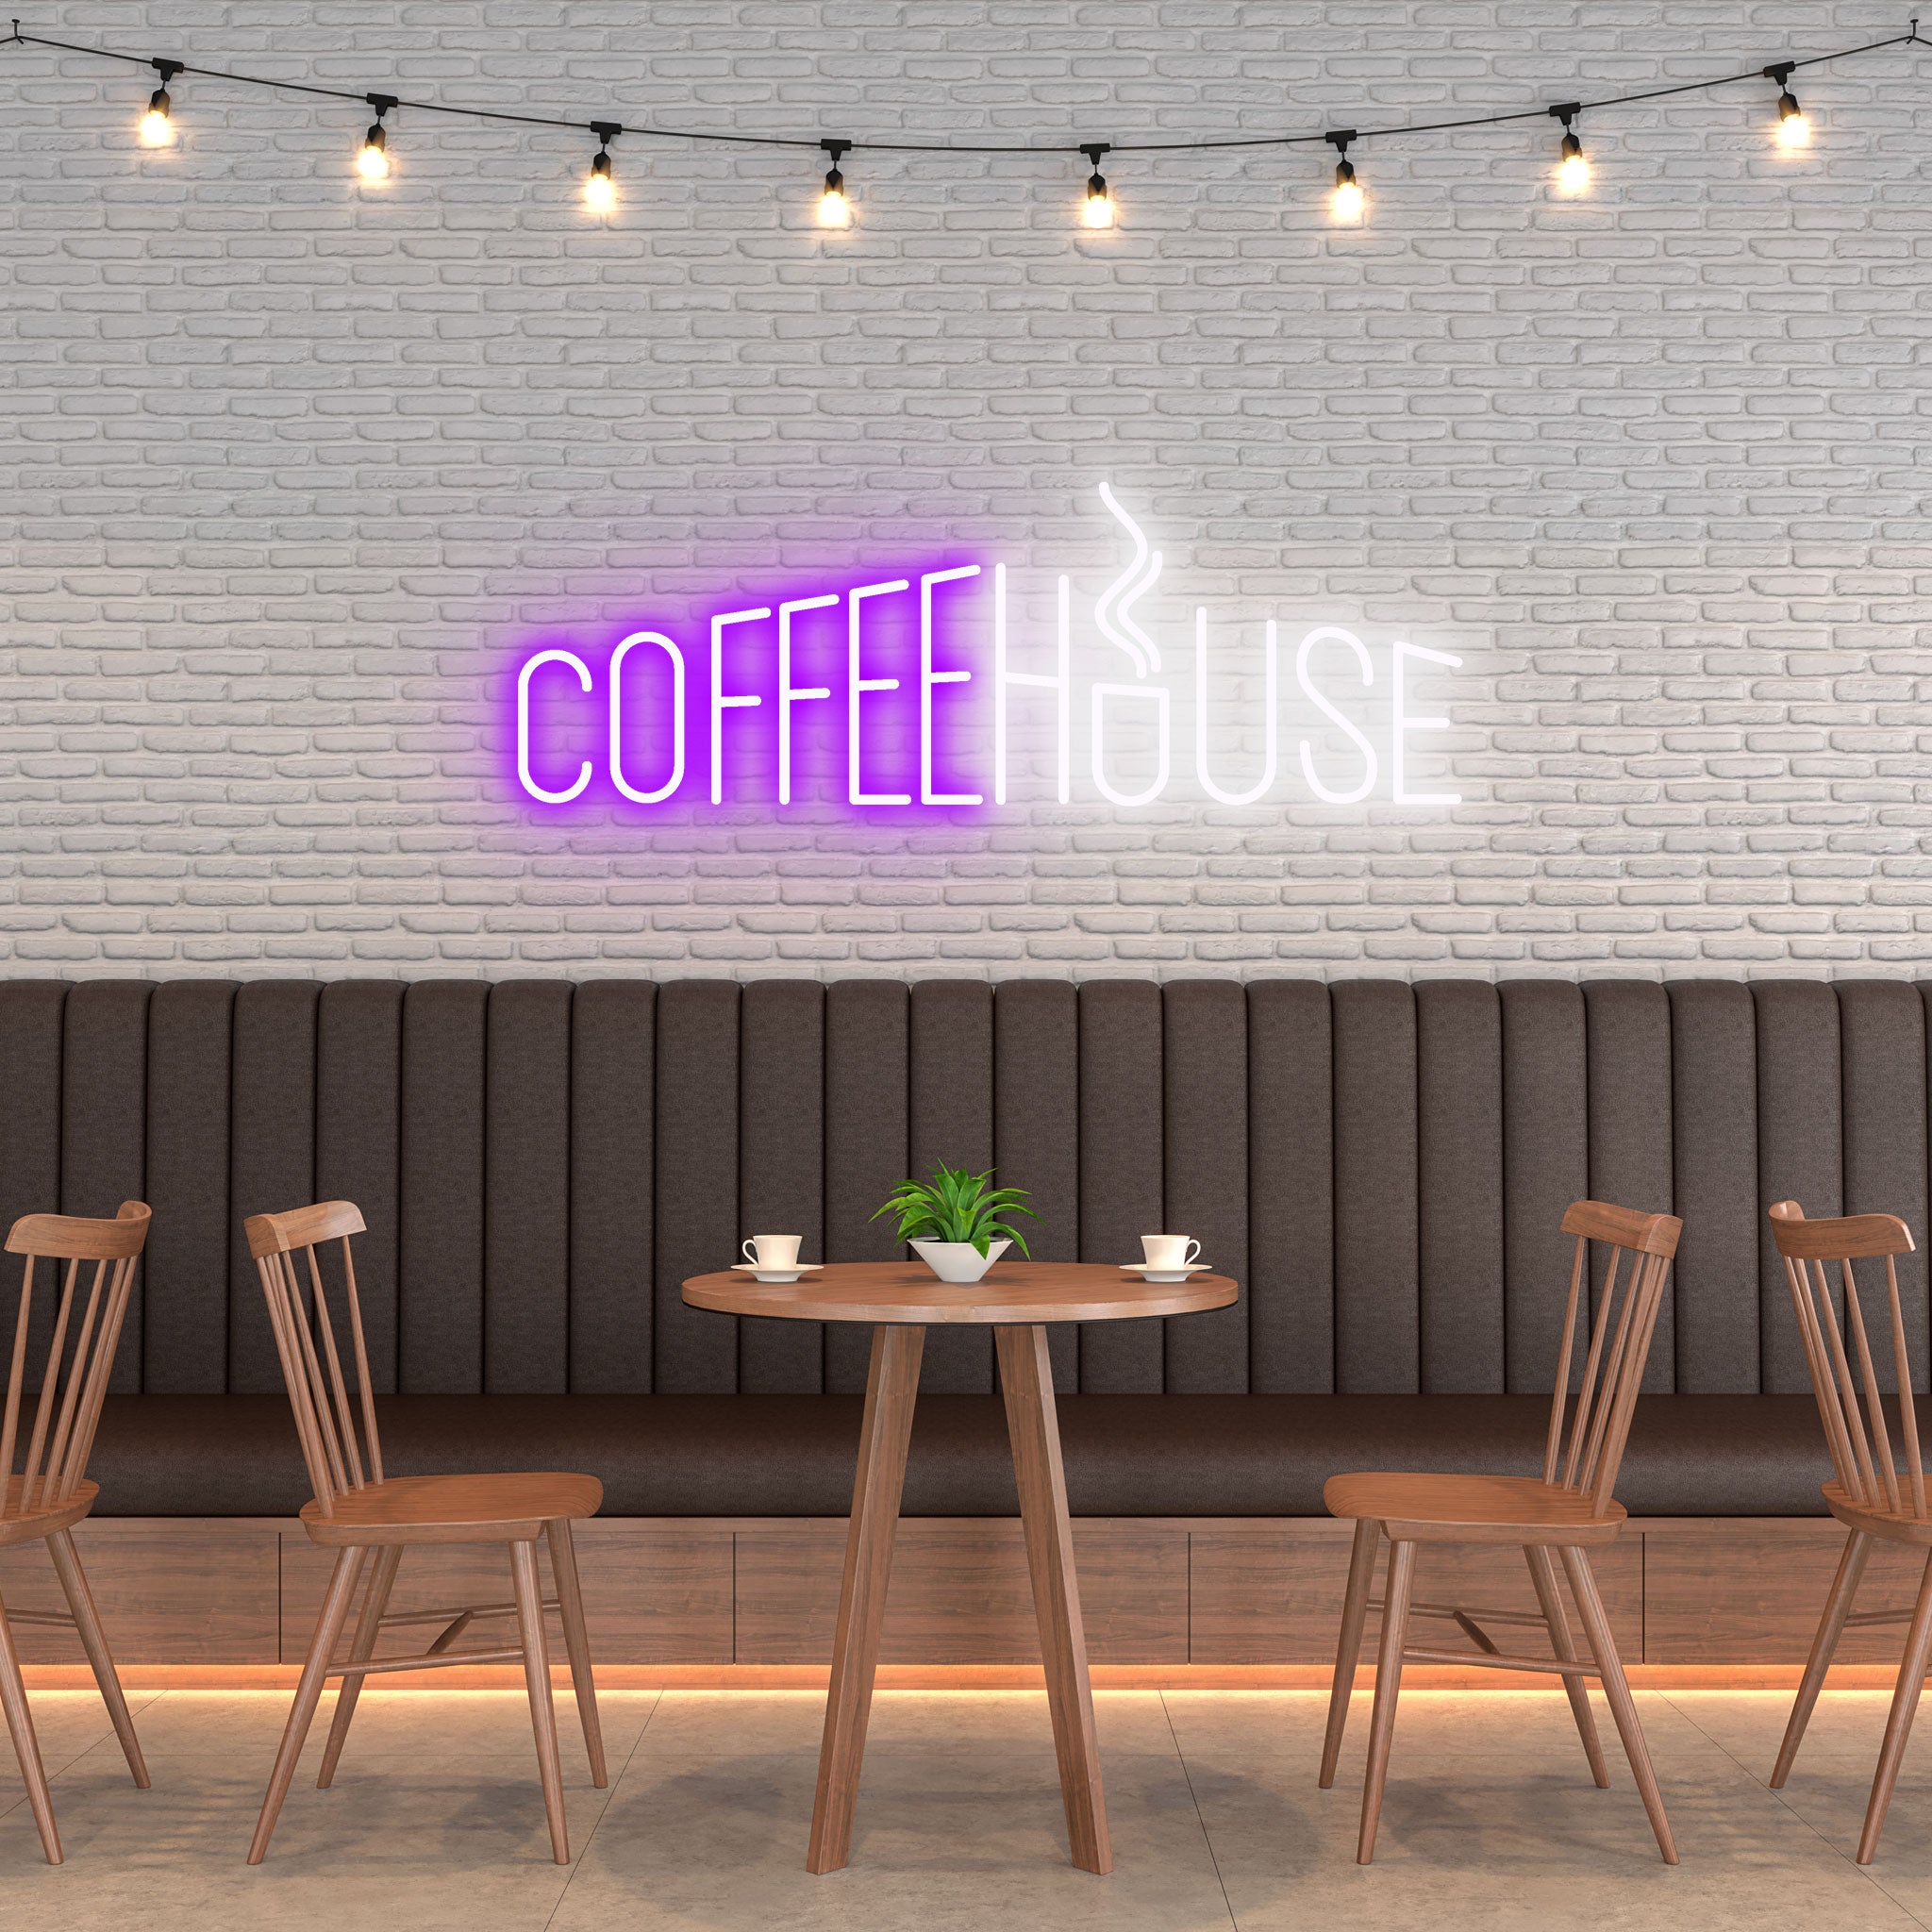 Coffee House - Neon Sign - Café Venue